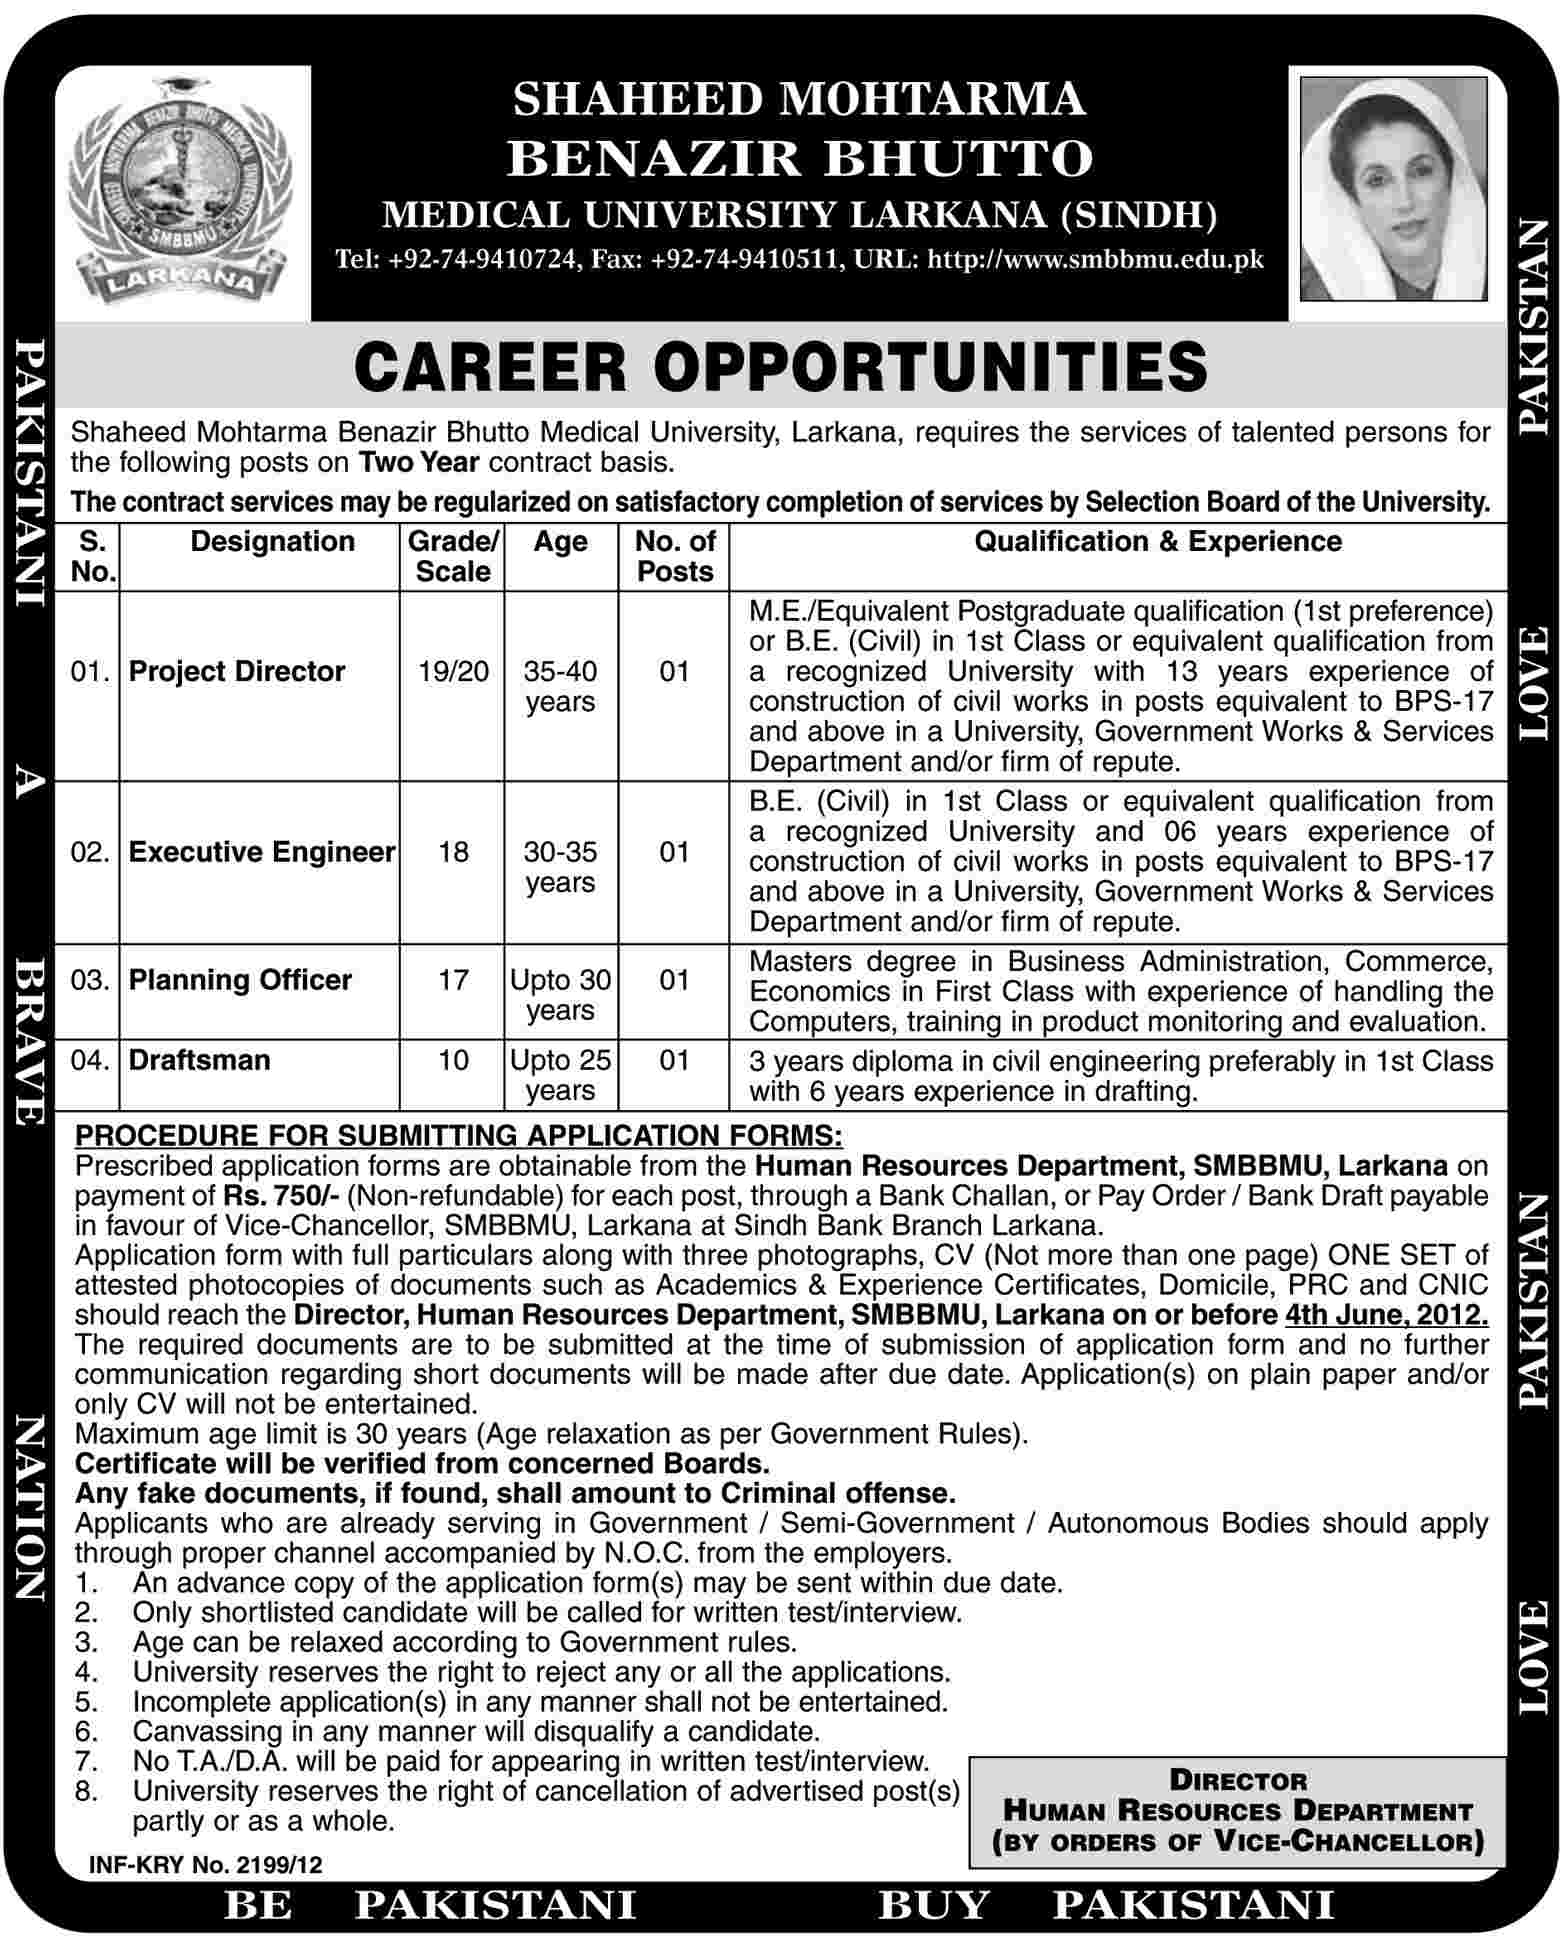 Administrative Jobs at Shaheed Mohtarma Benazir Bhutto Medical University (SMBBMU)